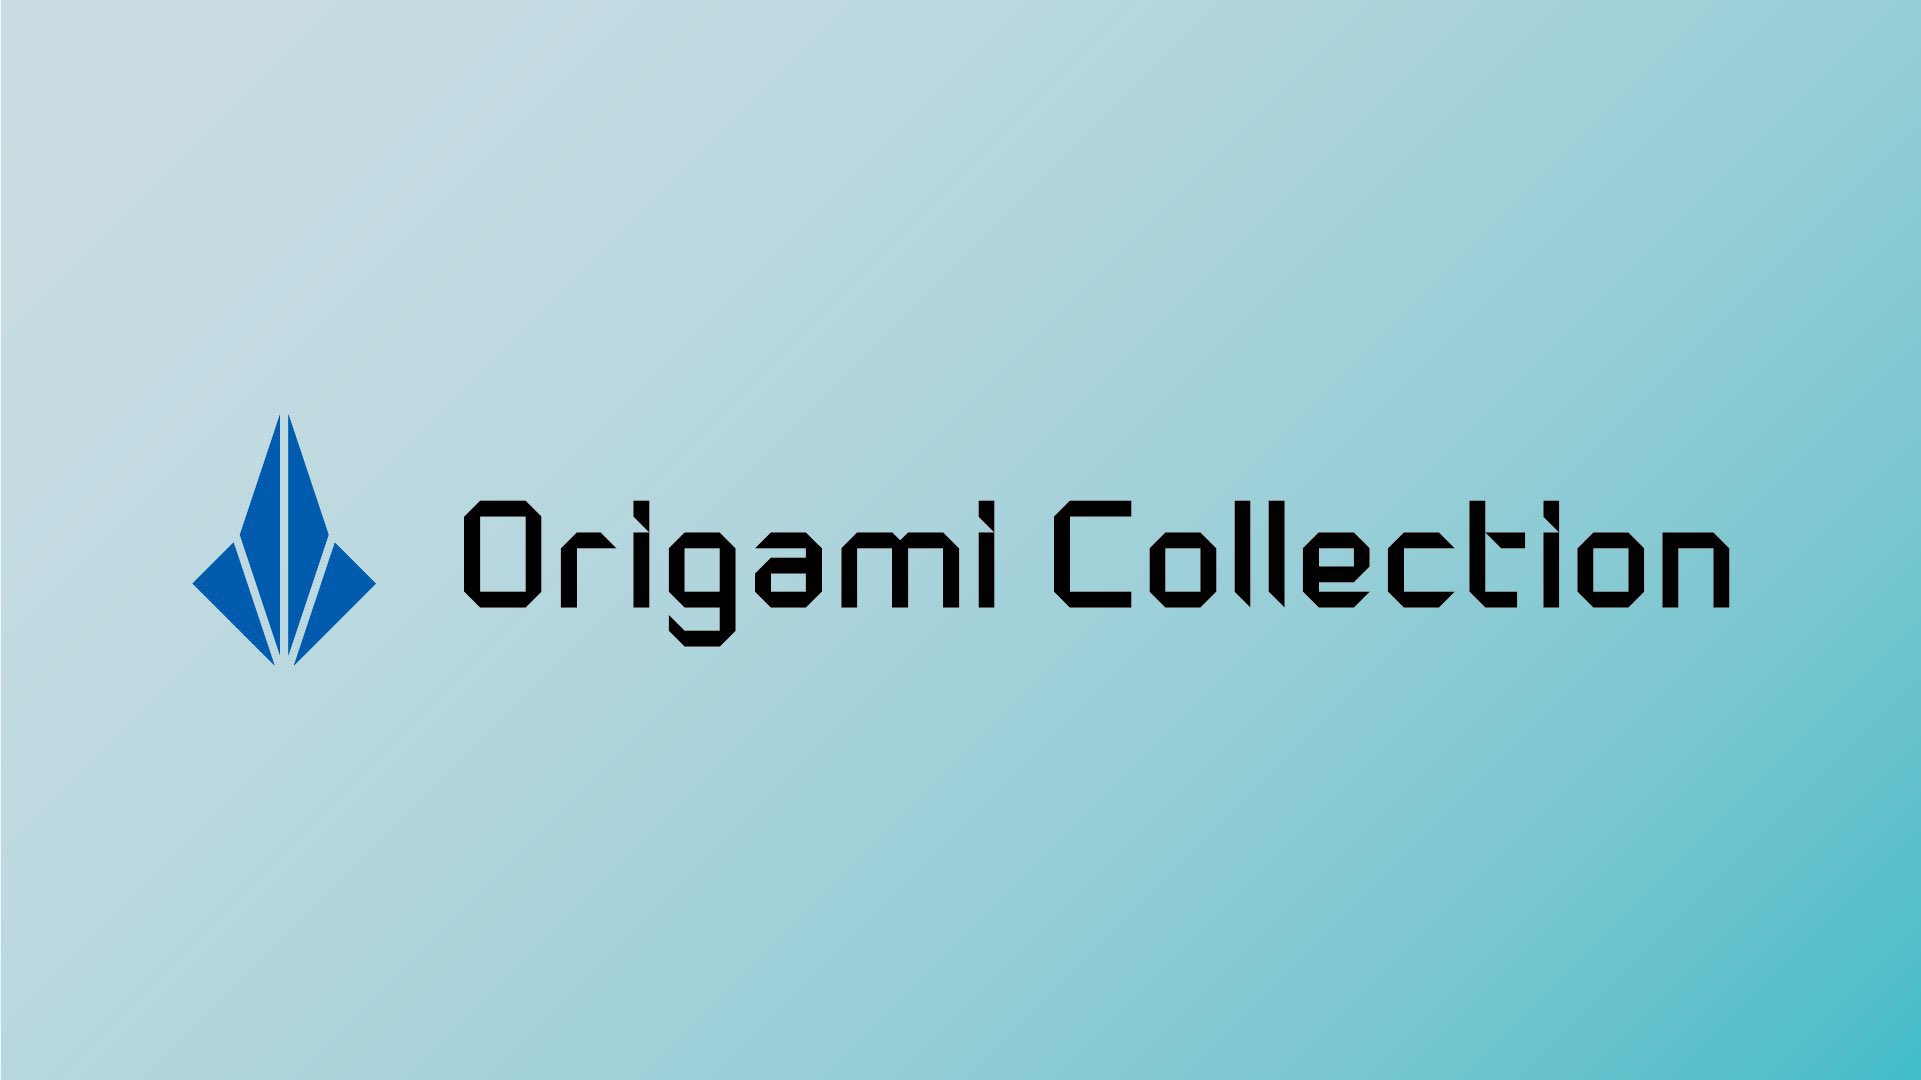 Origami_Collection bannière